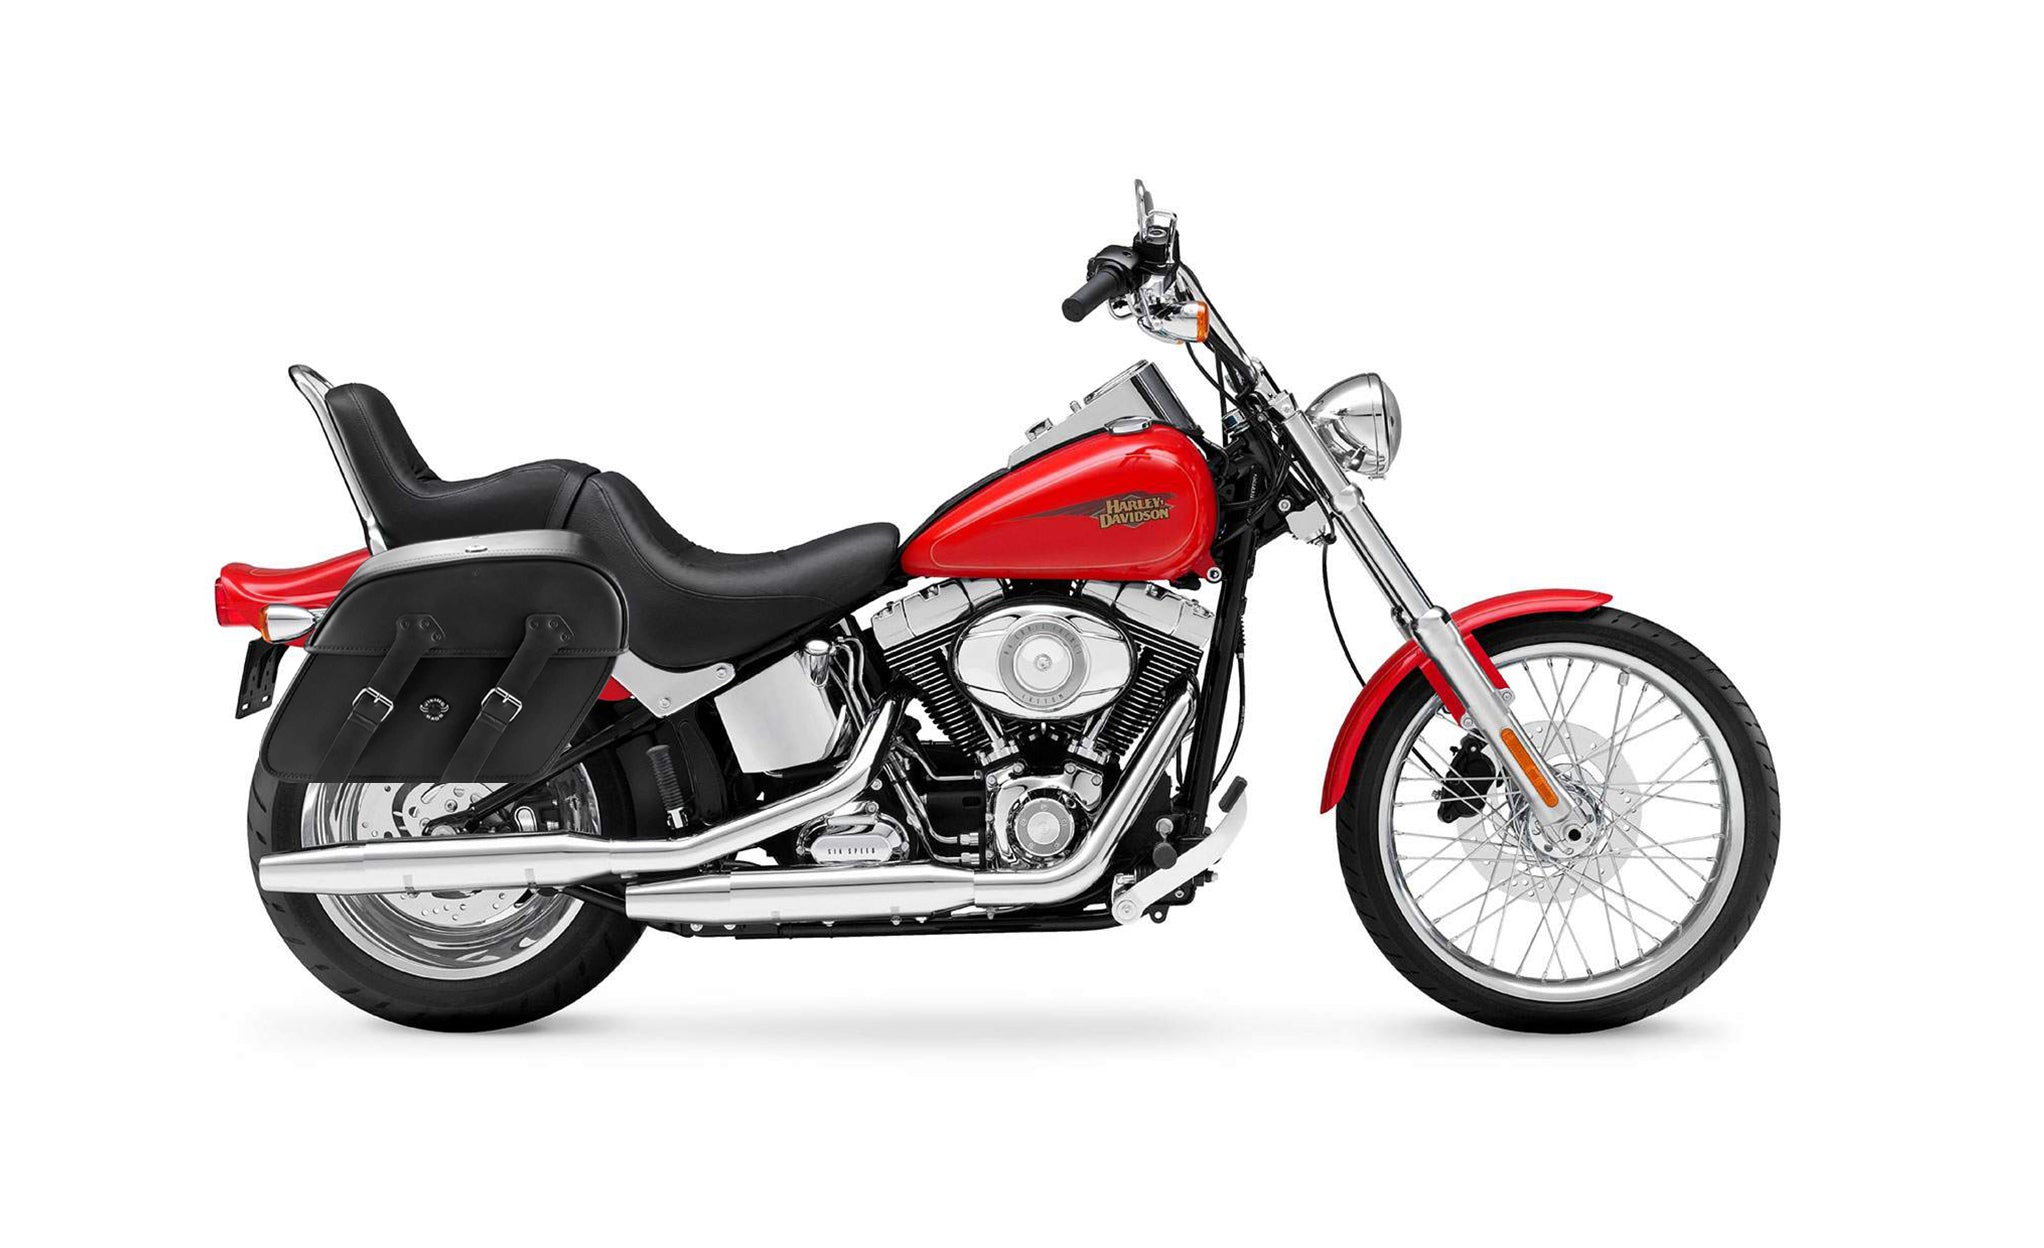 Viking Raven Large Motorcycle Leather Saddlebags For Harley Softail Custom Fxstc on Bike Photo @expand